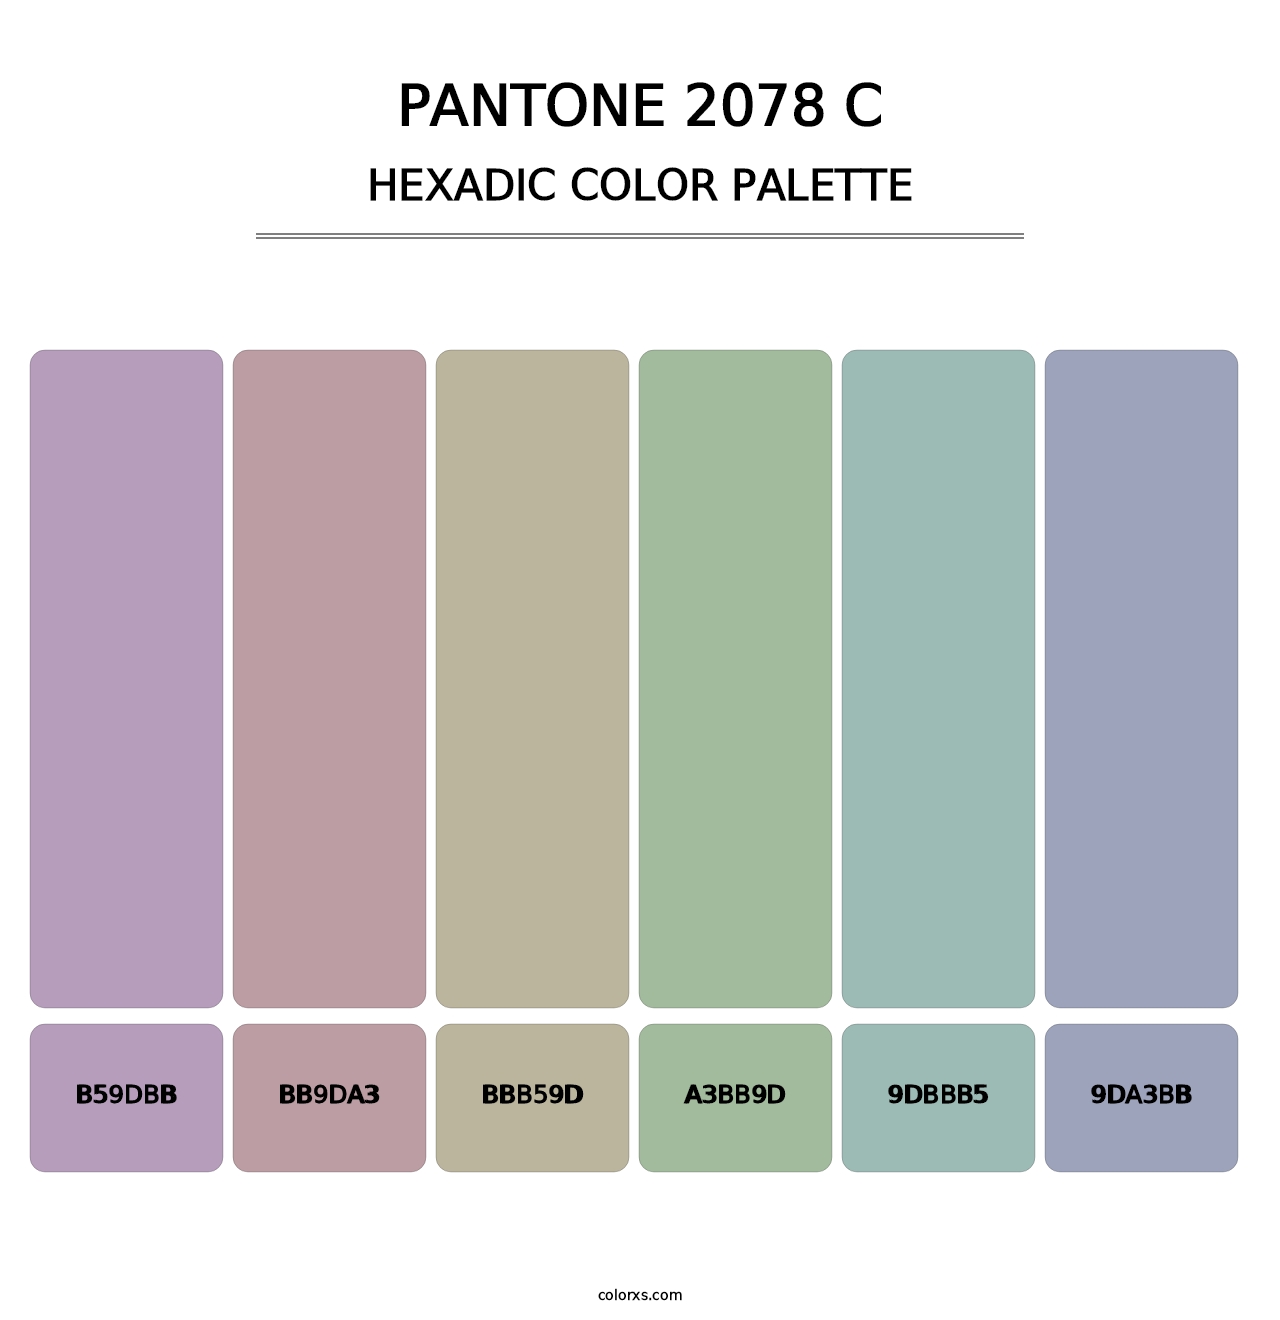 PANTONE 2078 C - Hexadic Color Palette